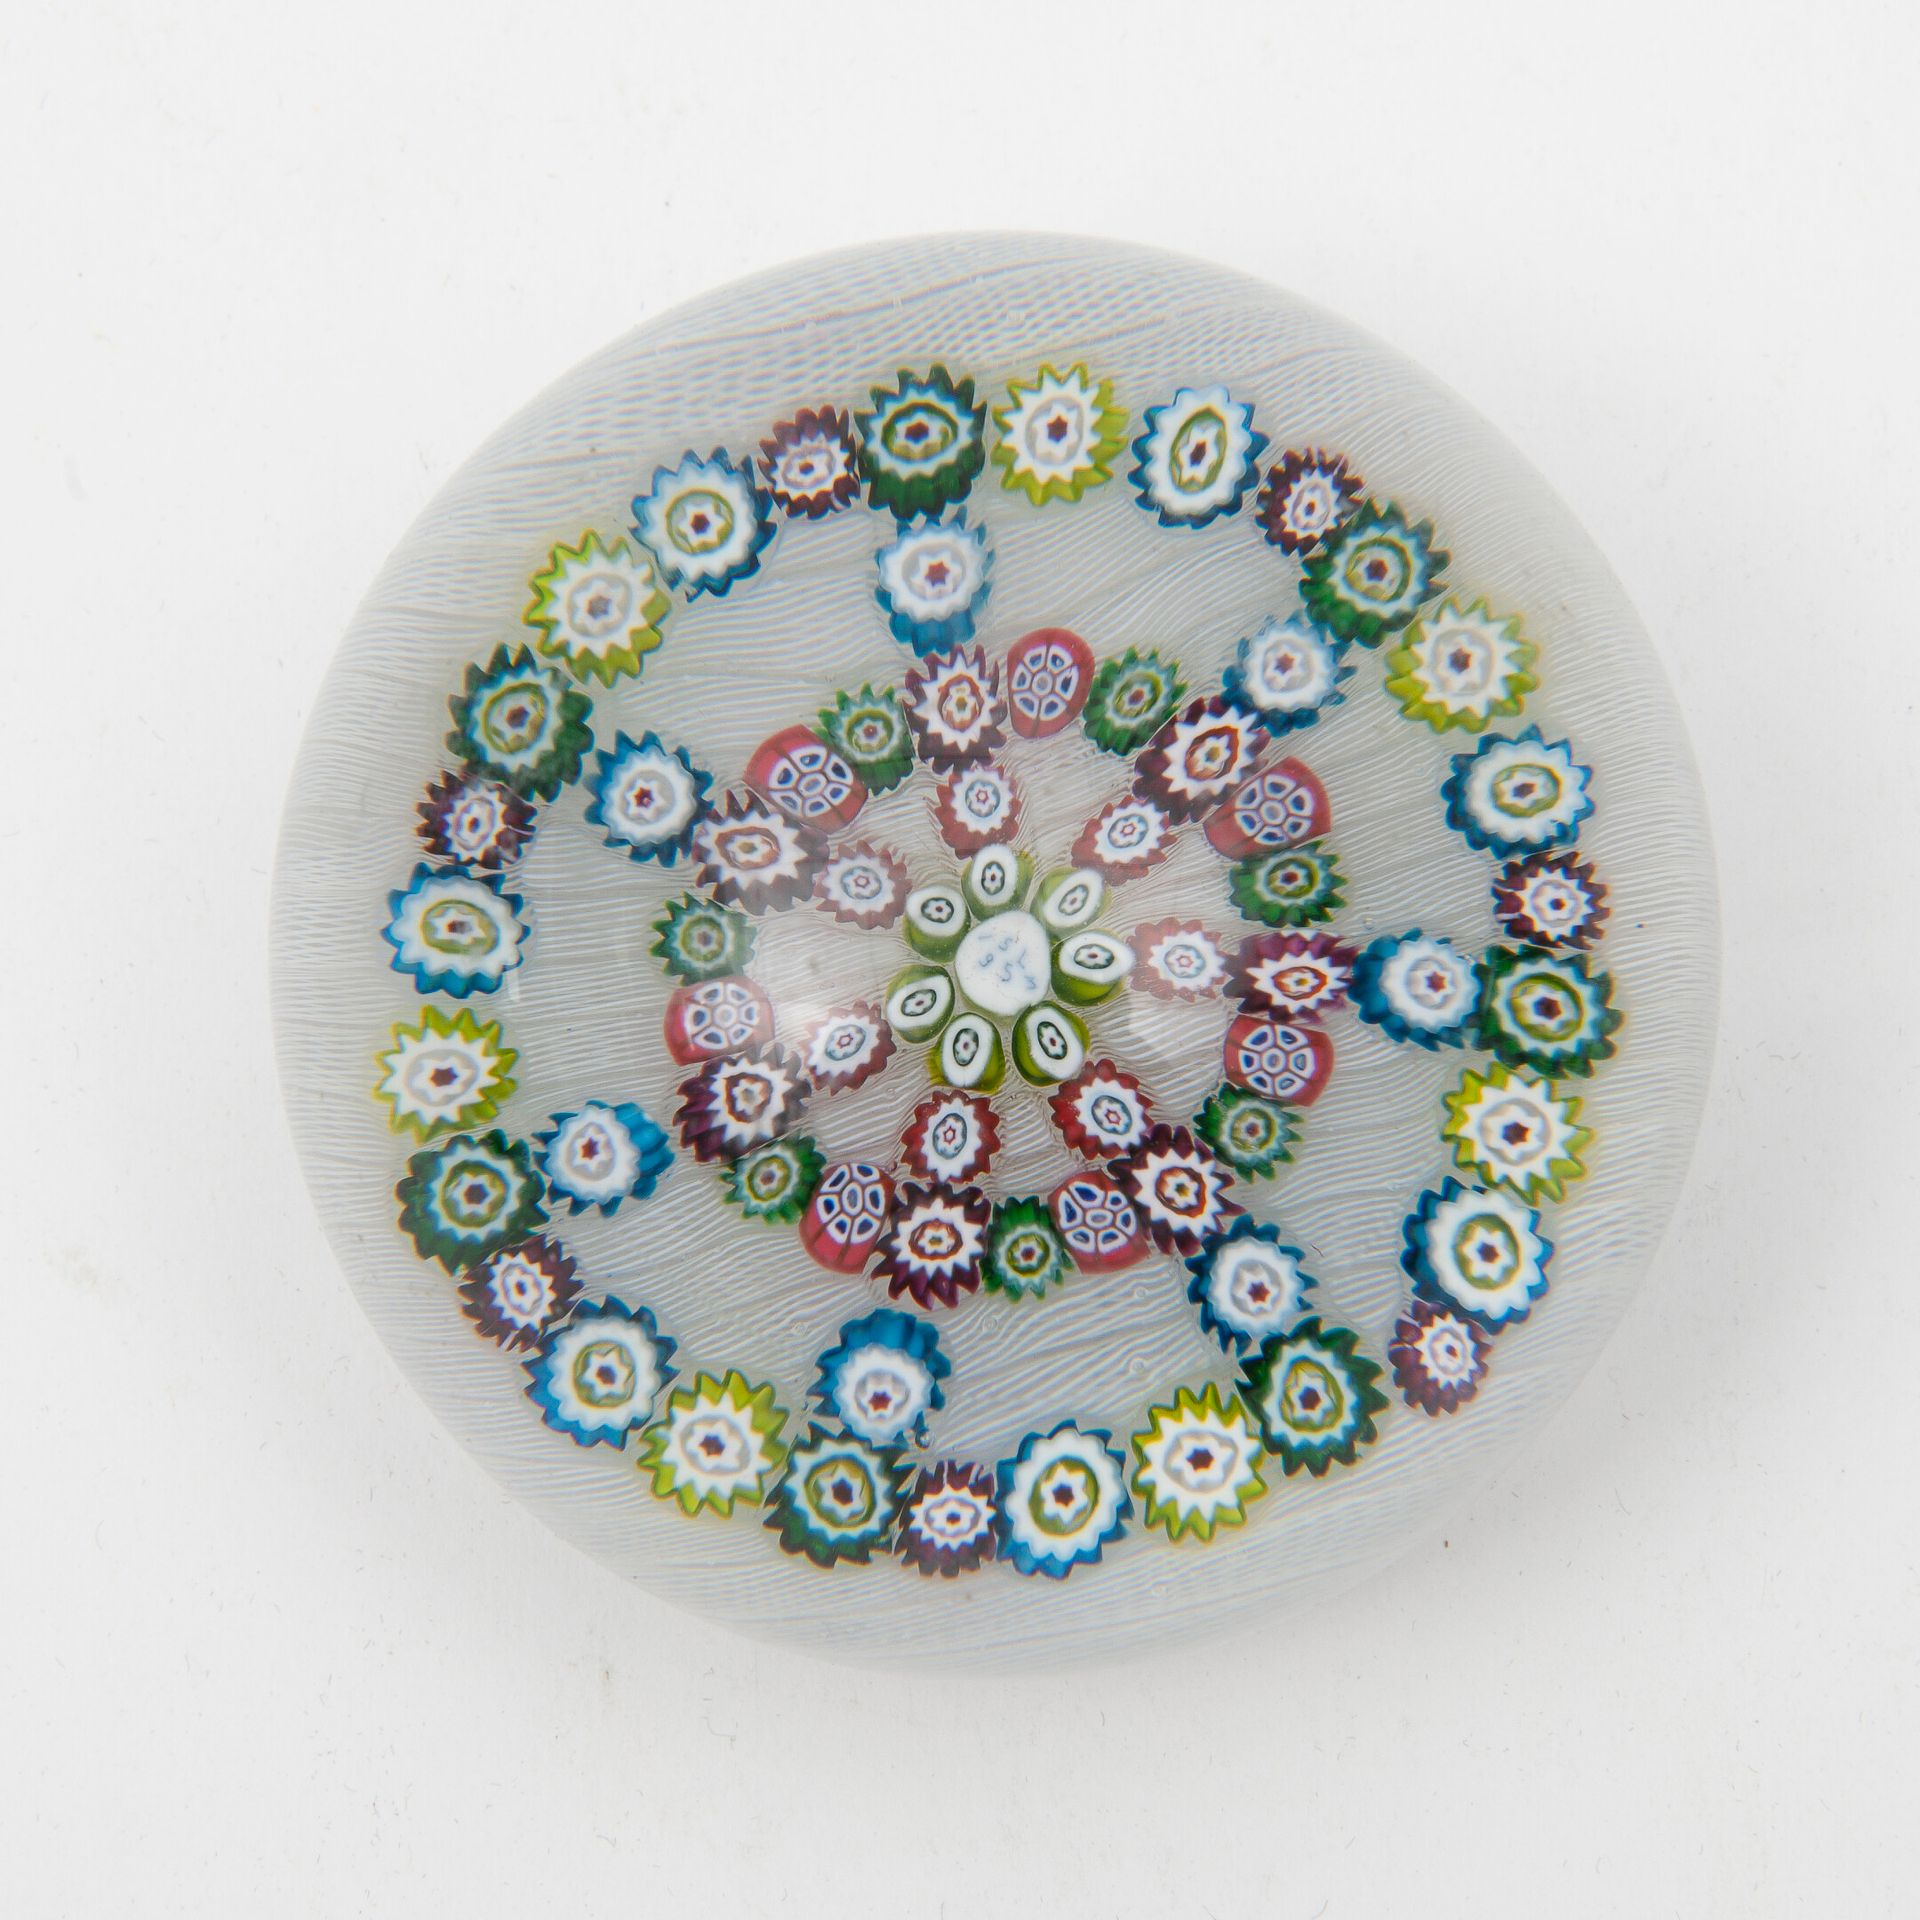 SAINT-LOUIS 无色的水晶球形成一个镇纸，上面装饰着五颜六色的糖果，在花丝背景上排列成一个圆圈和星星。

底座下有 "Cristal Saint-Lou&hellip;